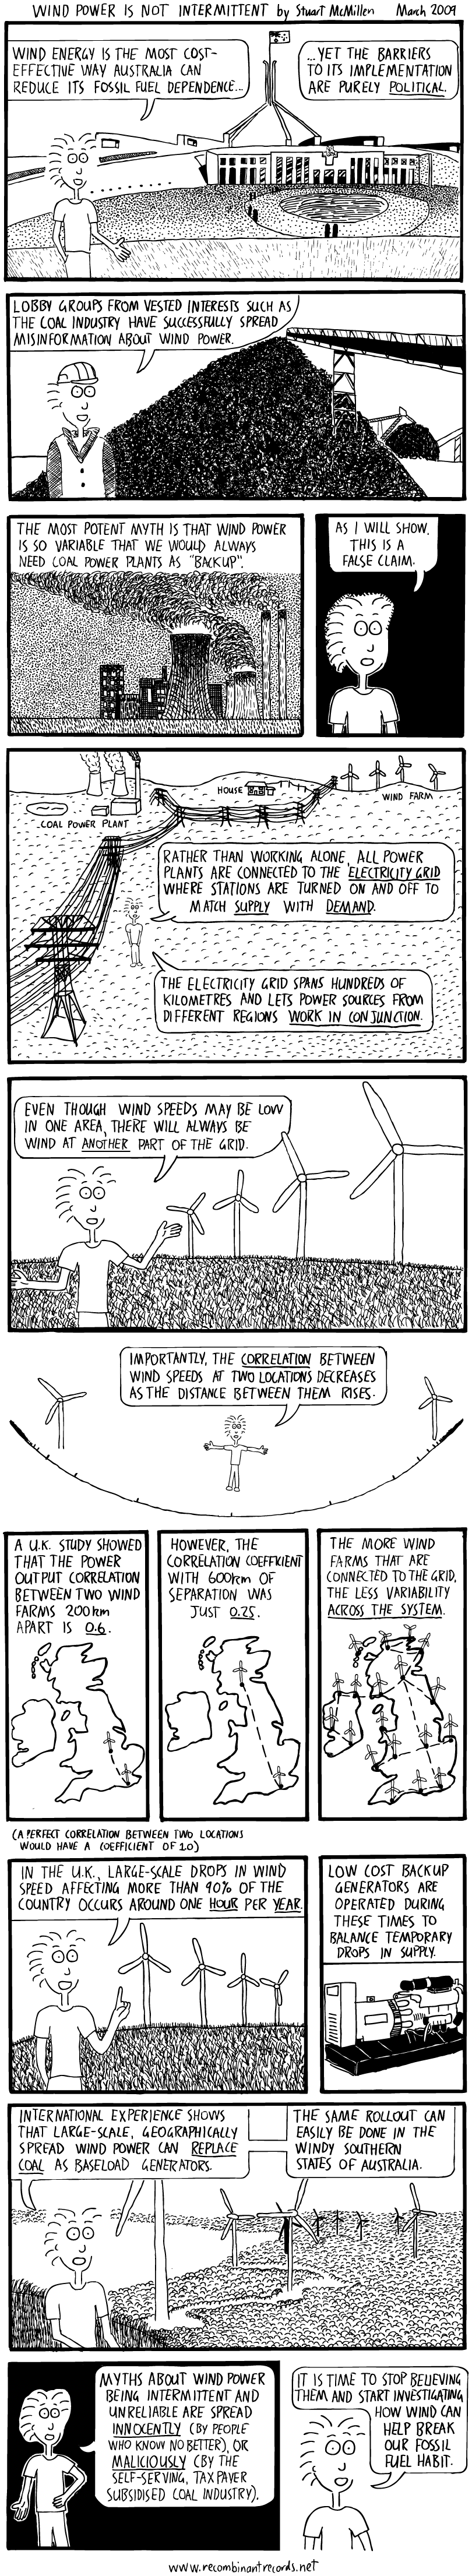 Wind Power is Not Intermittent cartoon